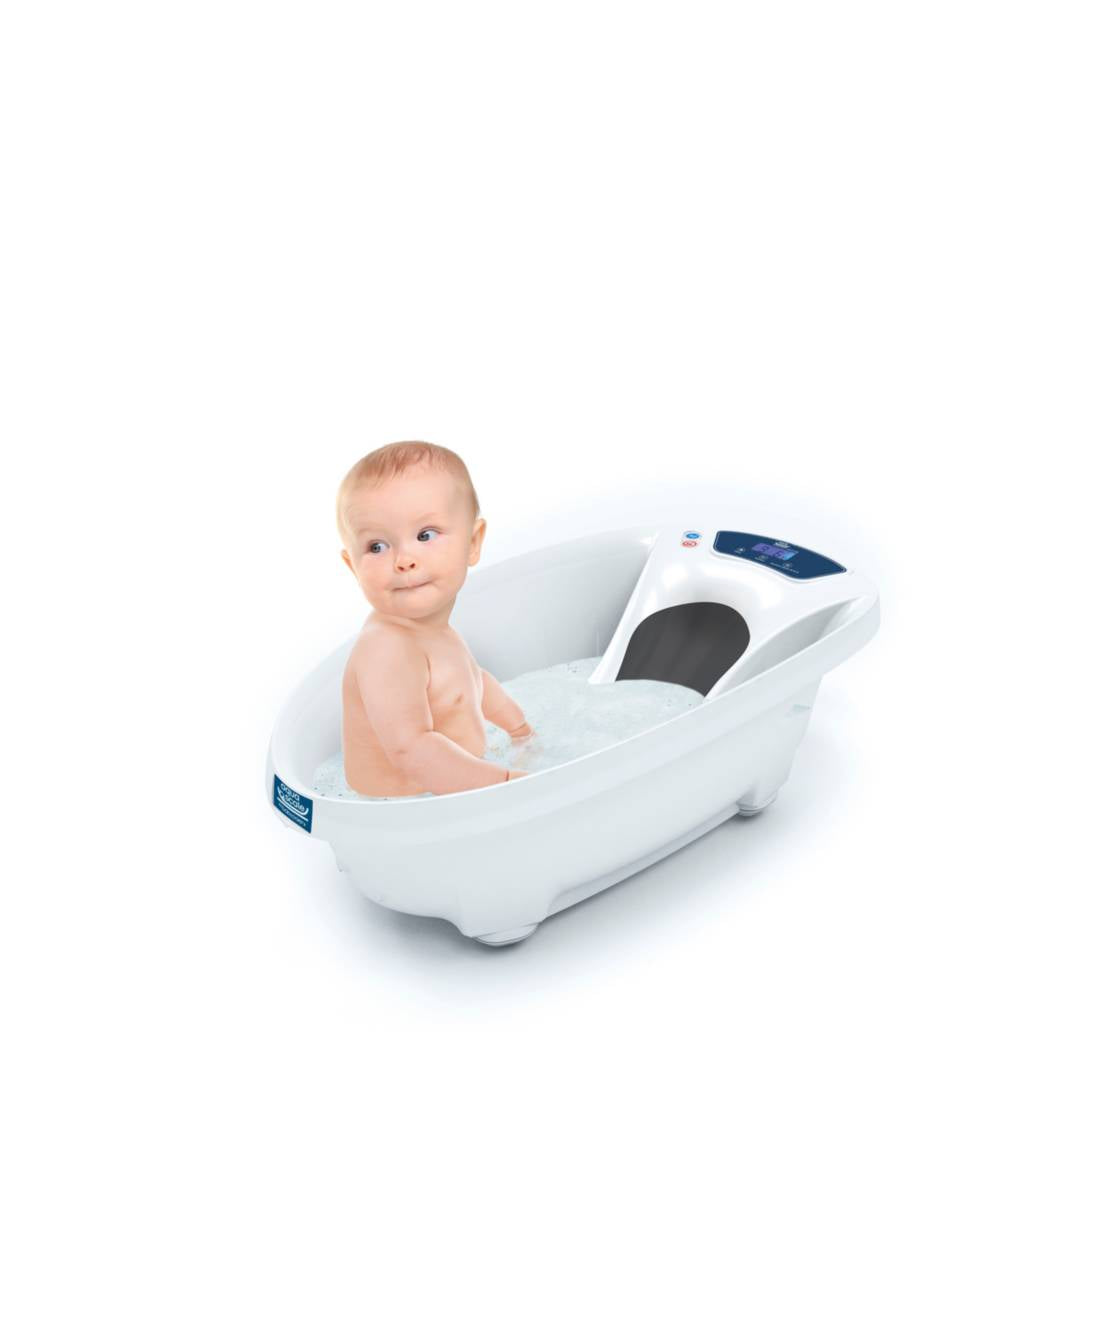 Aquascale V3 Digital Baby Bath - White